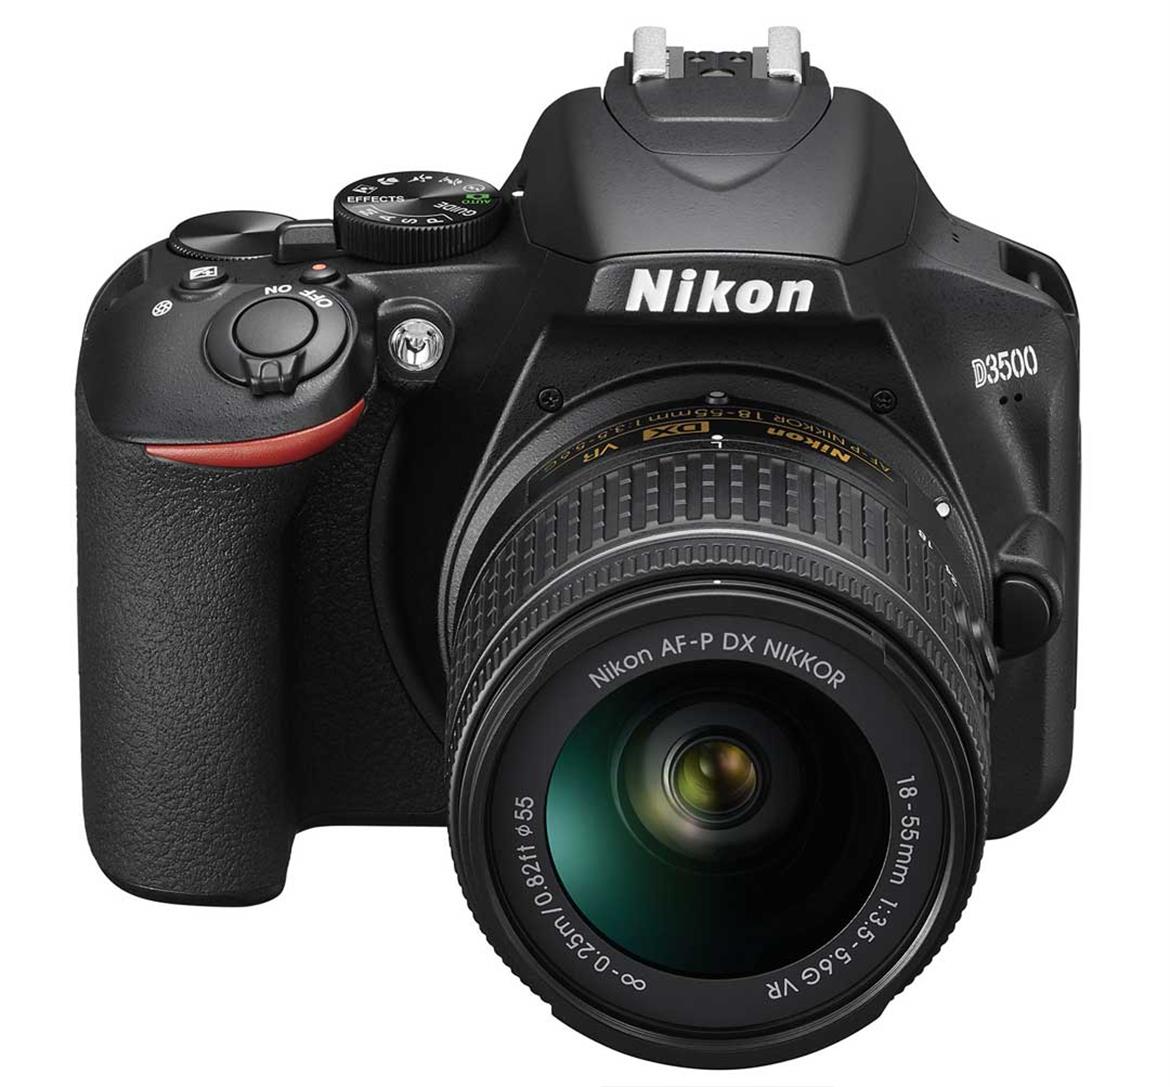 Nikon D3500 Compact Entry-Level DSLR Aims To Lure Newbie Photographers